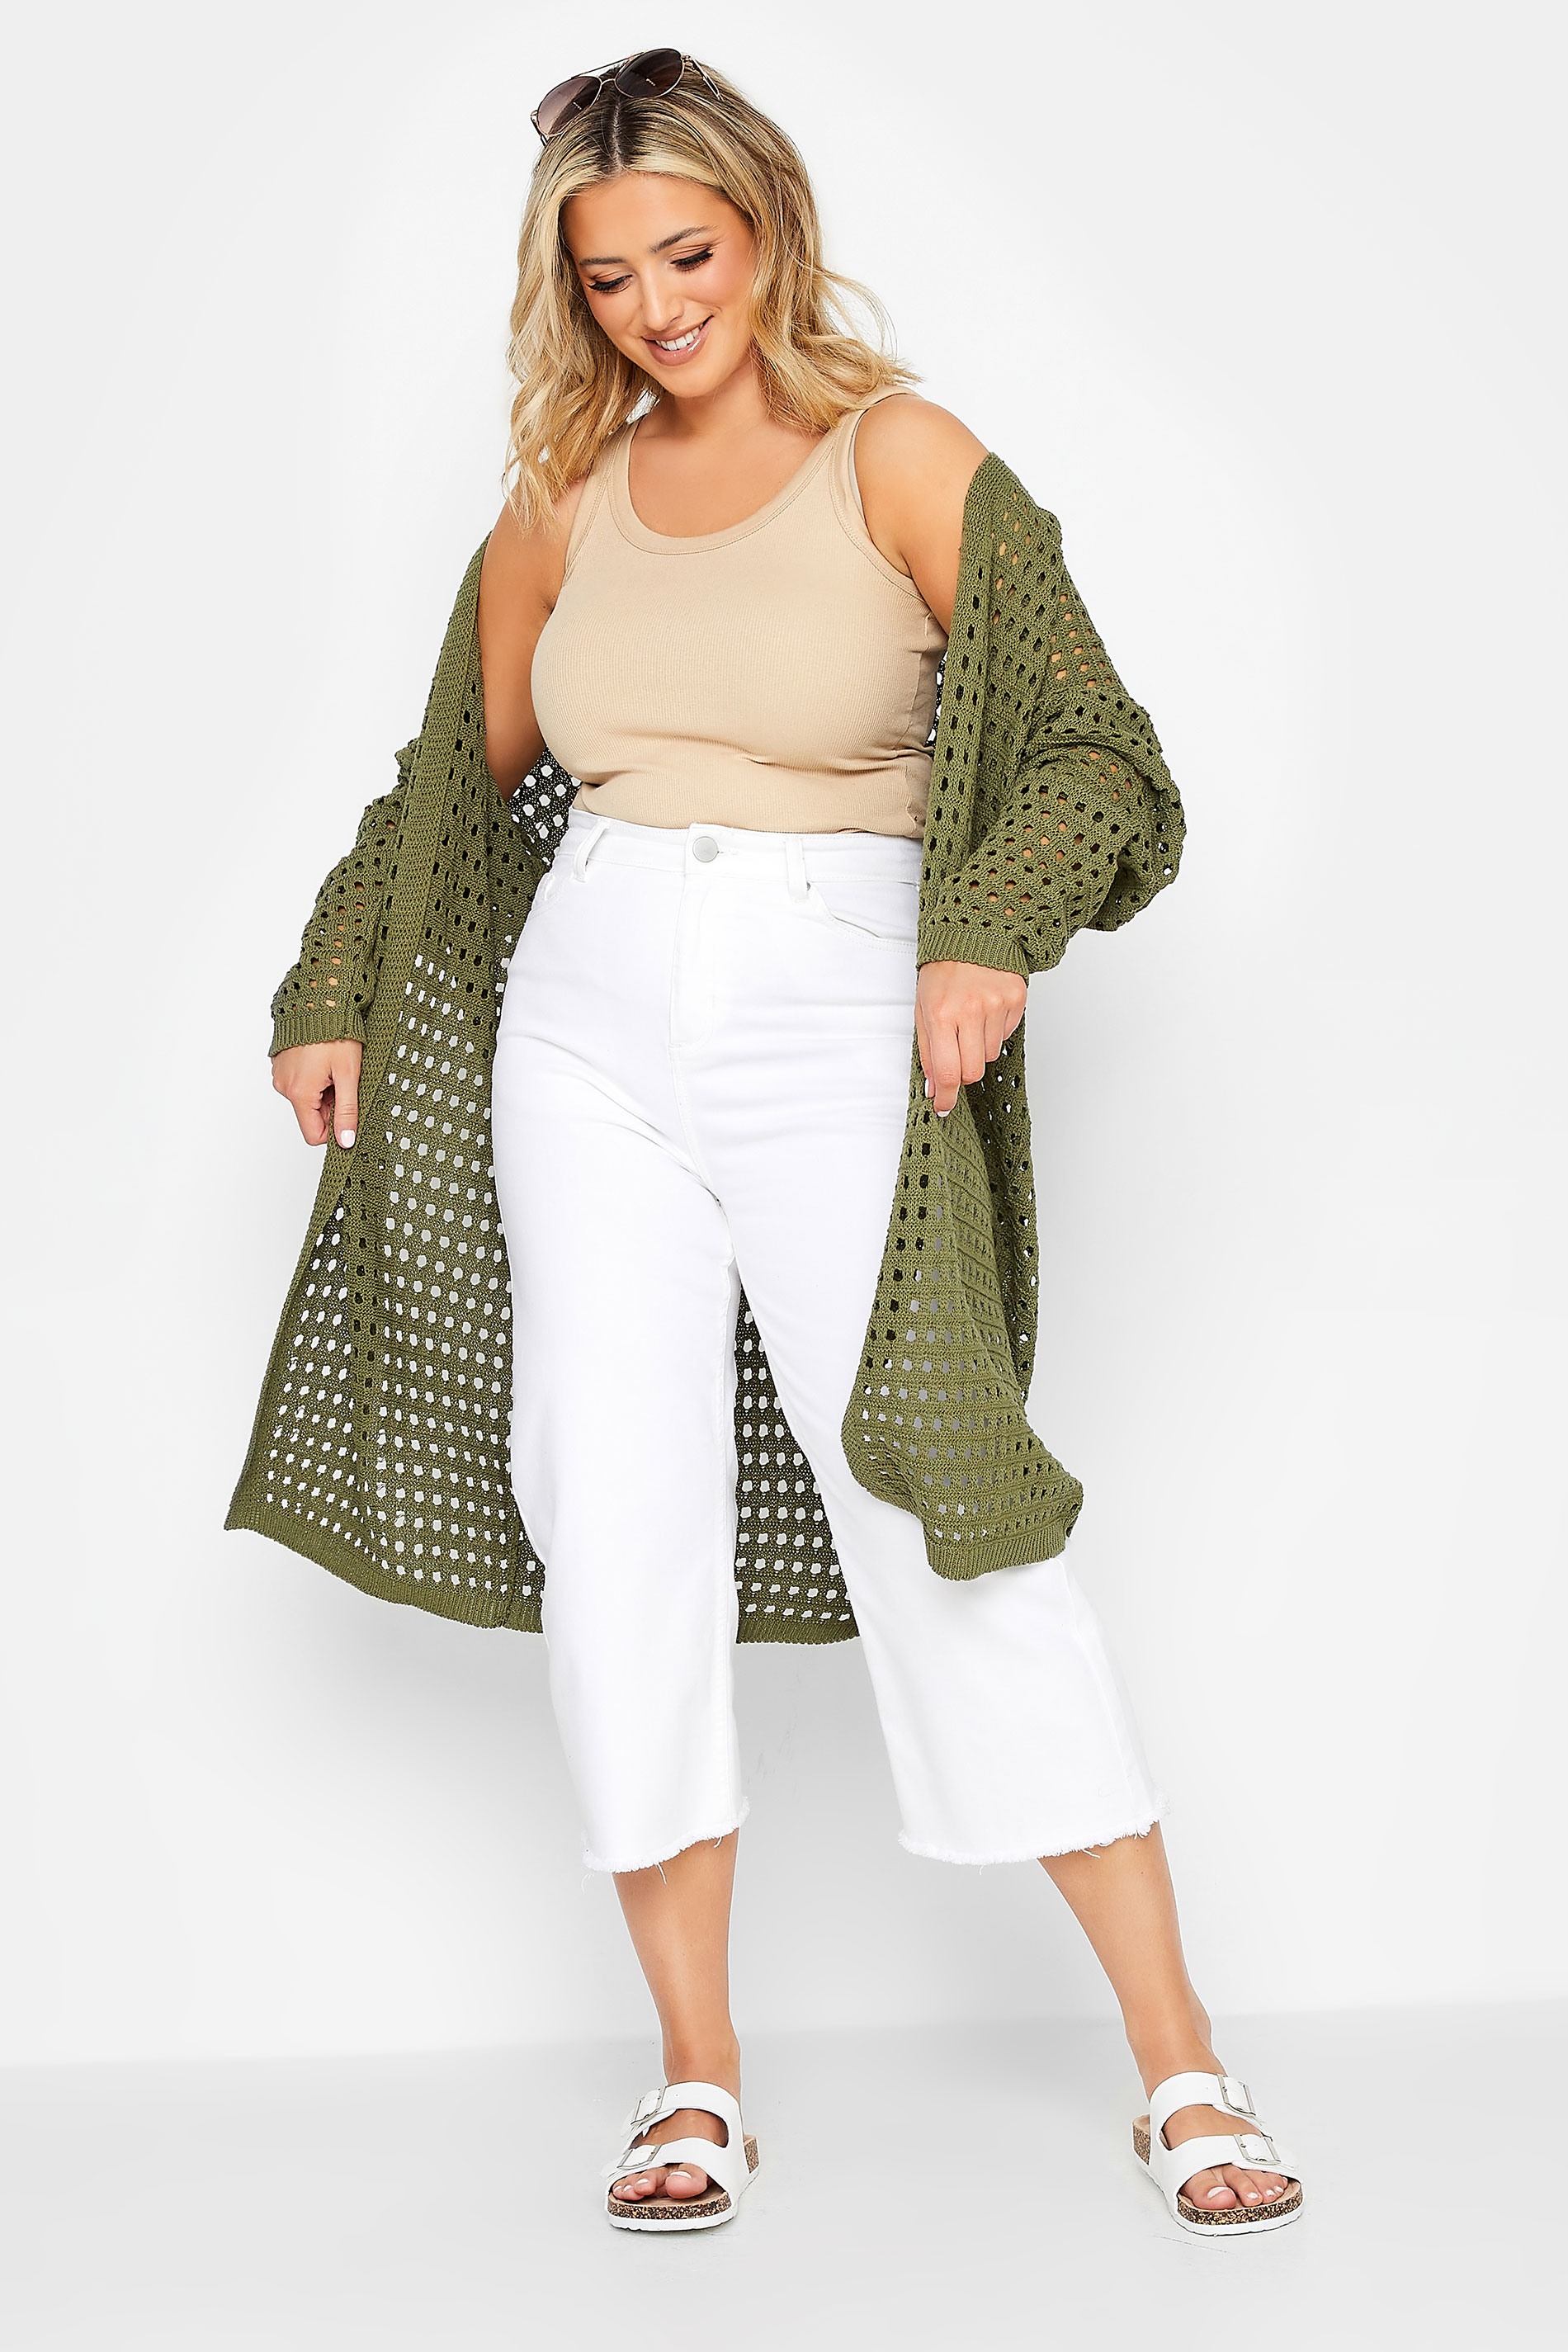 YOURS Plus Size Khaki Green Crochet Cardigan | Yours Clothing 2